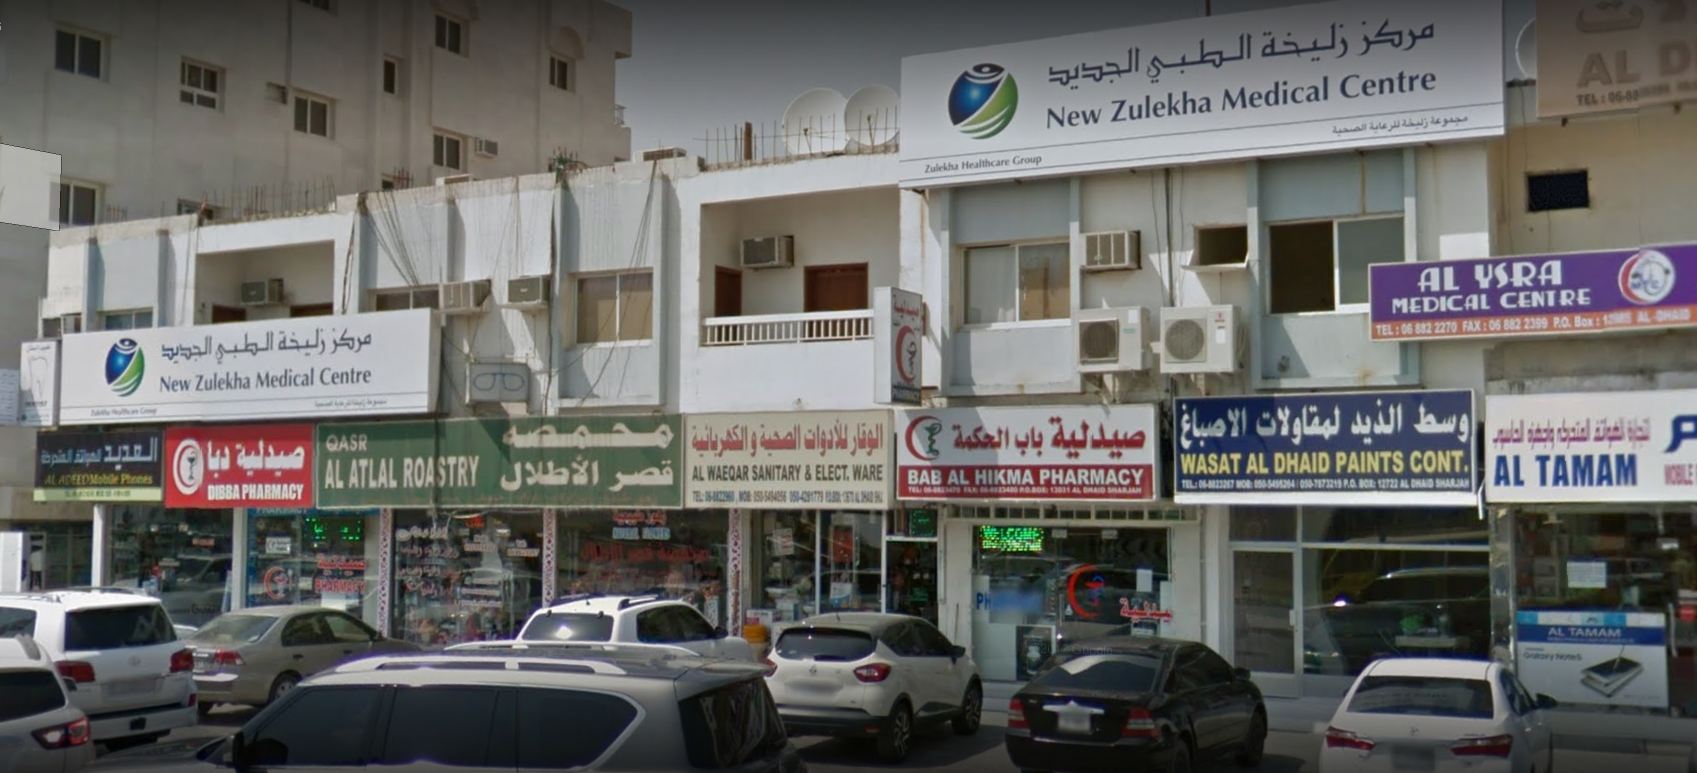 Zulekha Medical Centre - Al Khan, Sharjah in Al Dhaid